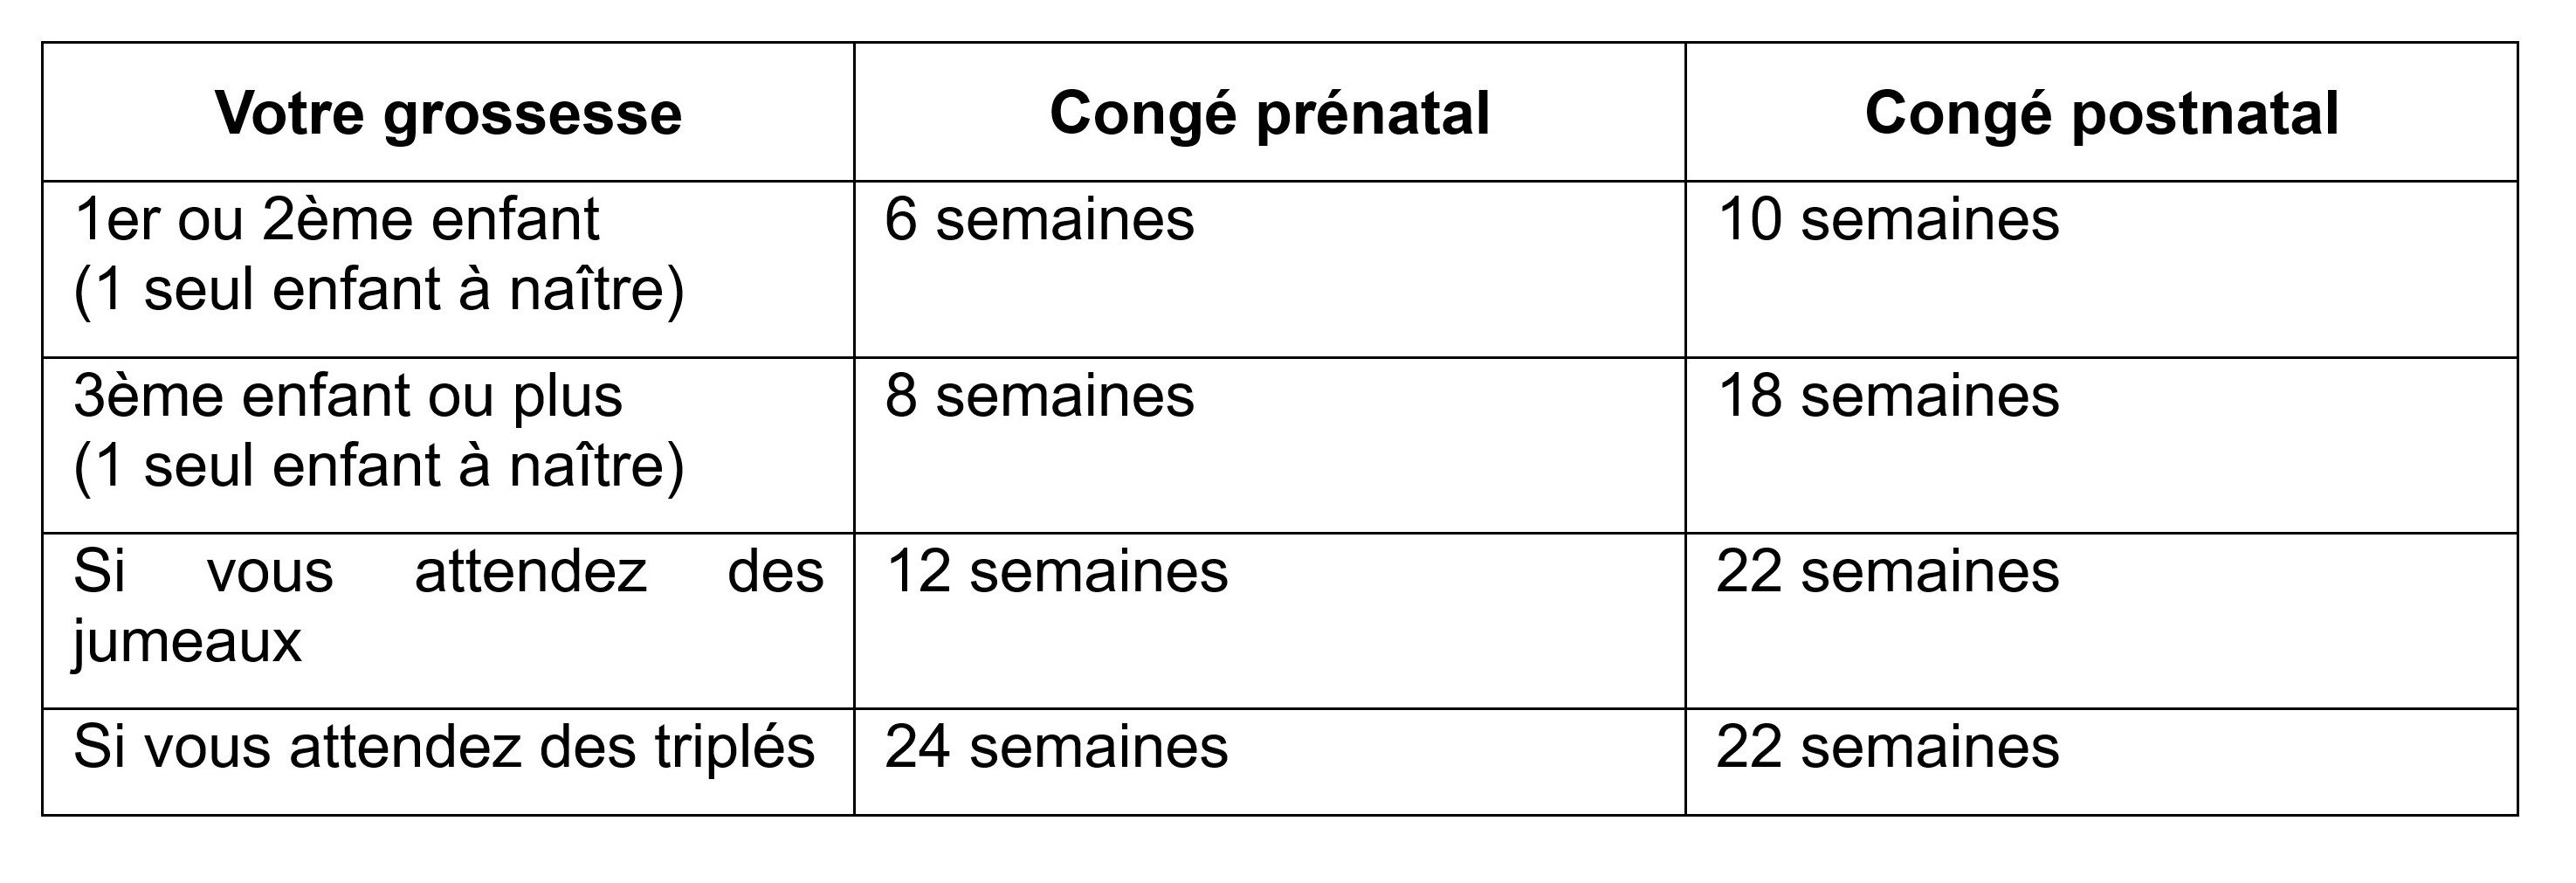 Grossesse Conge Prenatal Et Postnatal Mpedia Fr